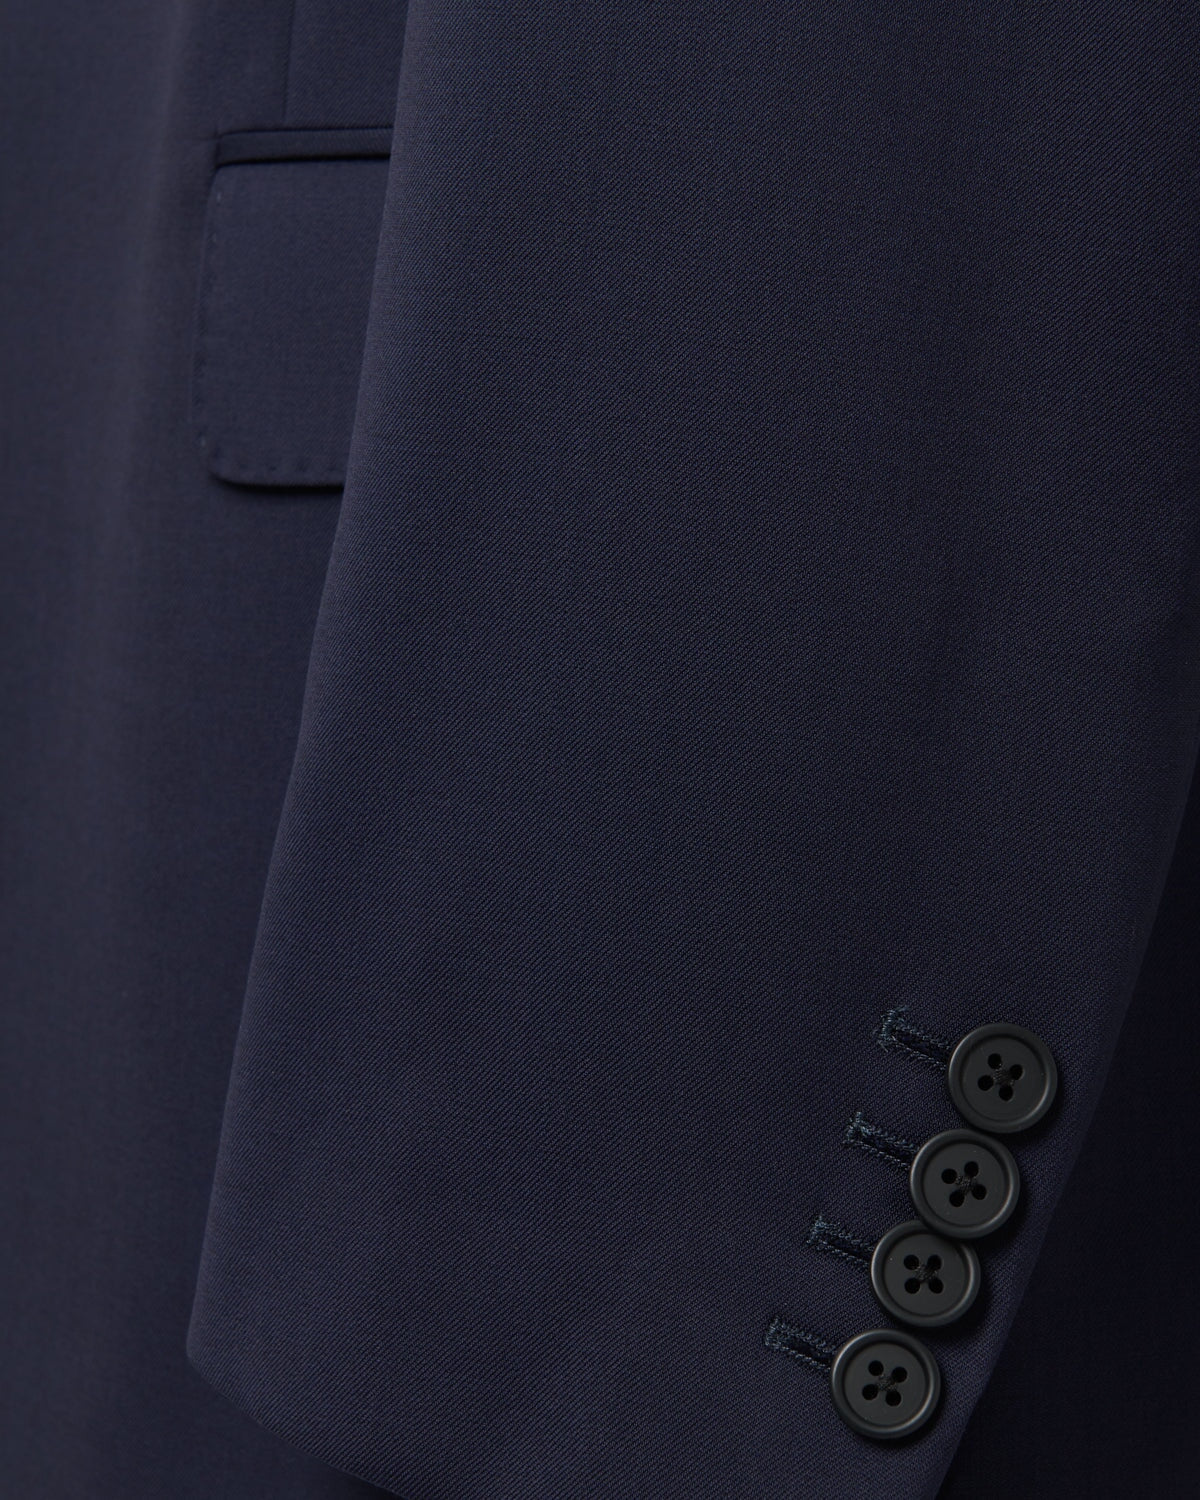 Kilgour Savile Row Tailoring SB1 KG Single Breasted Dark Navy Twill Suit